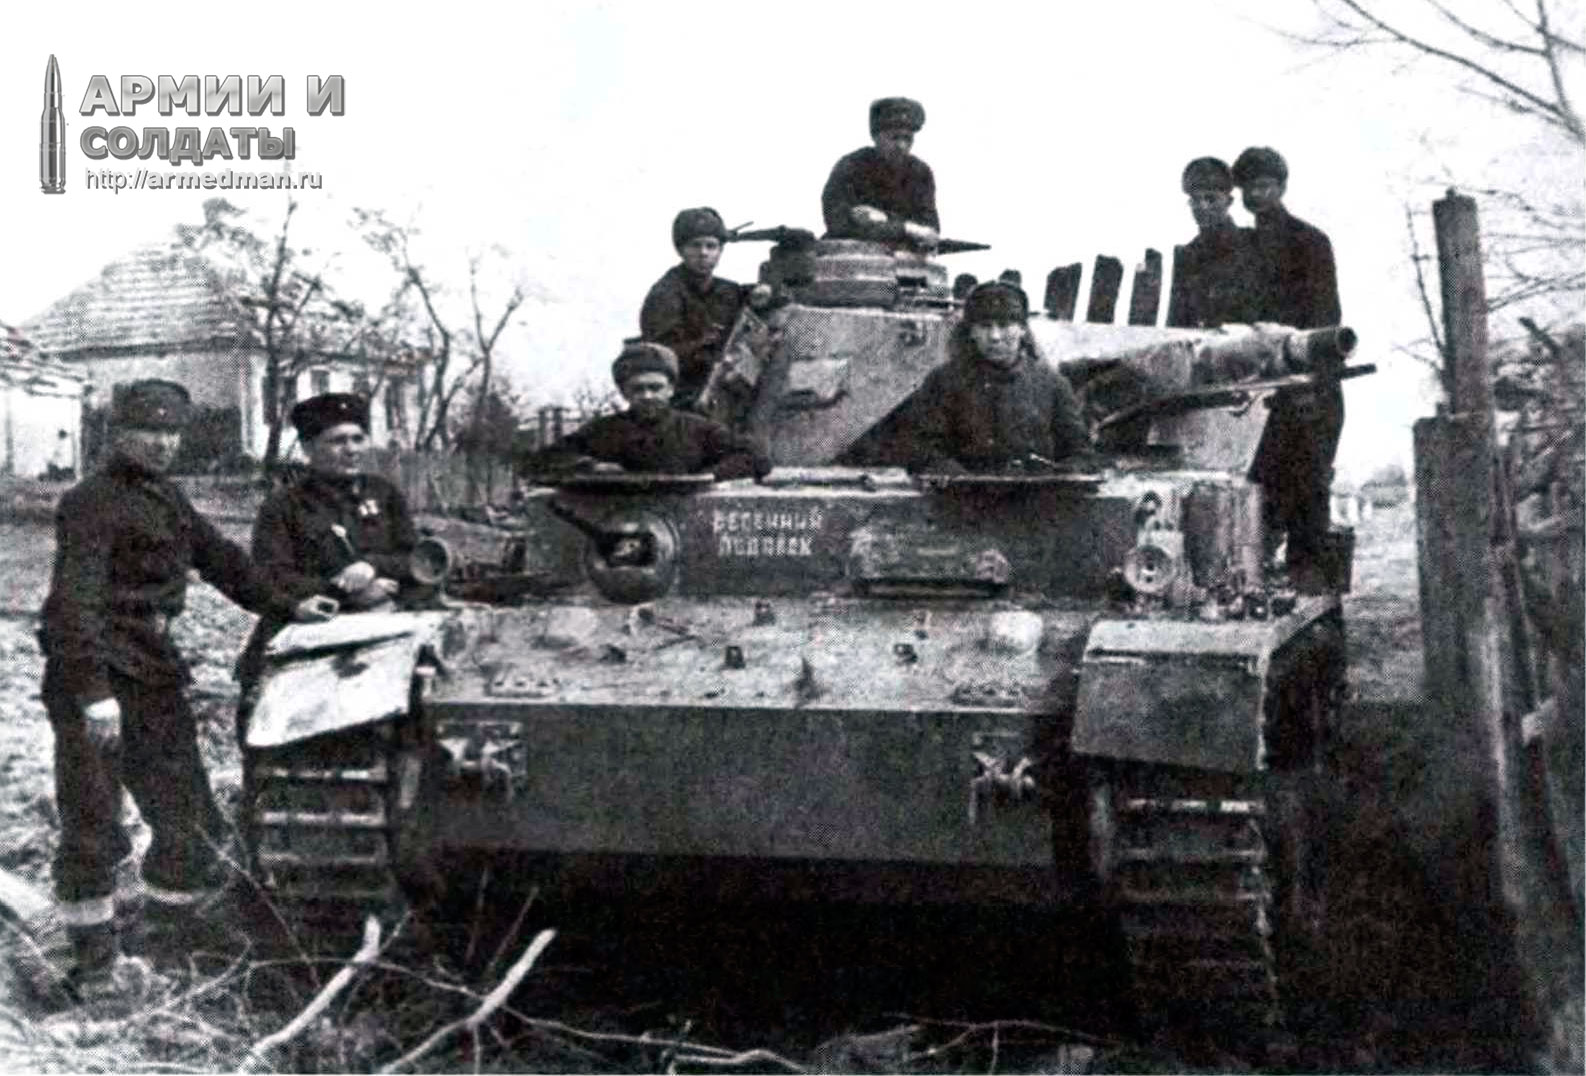 Pz-IV-(Весенний-подарок,-надпись-на-лобовой-броне),-северо-кавказский-фронт,-1943